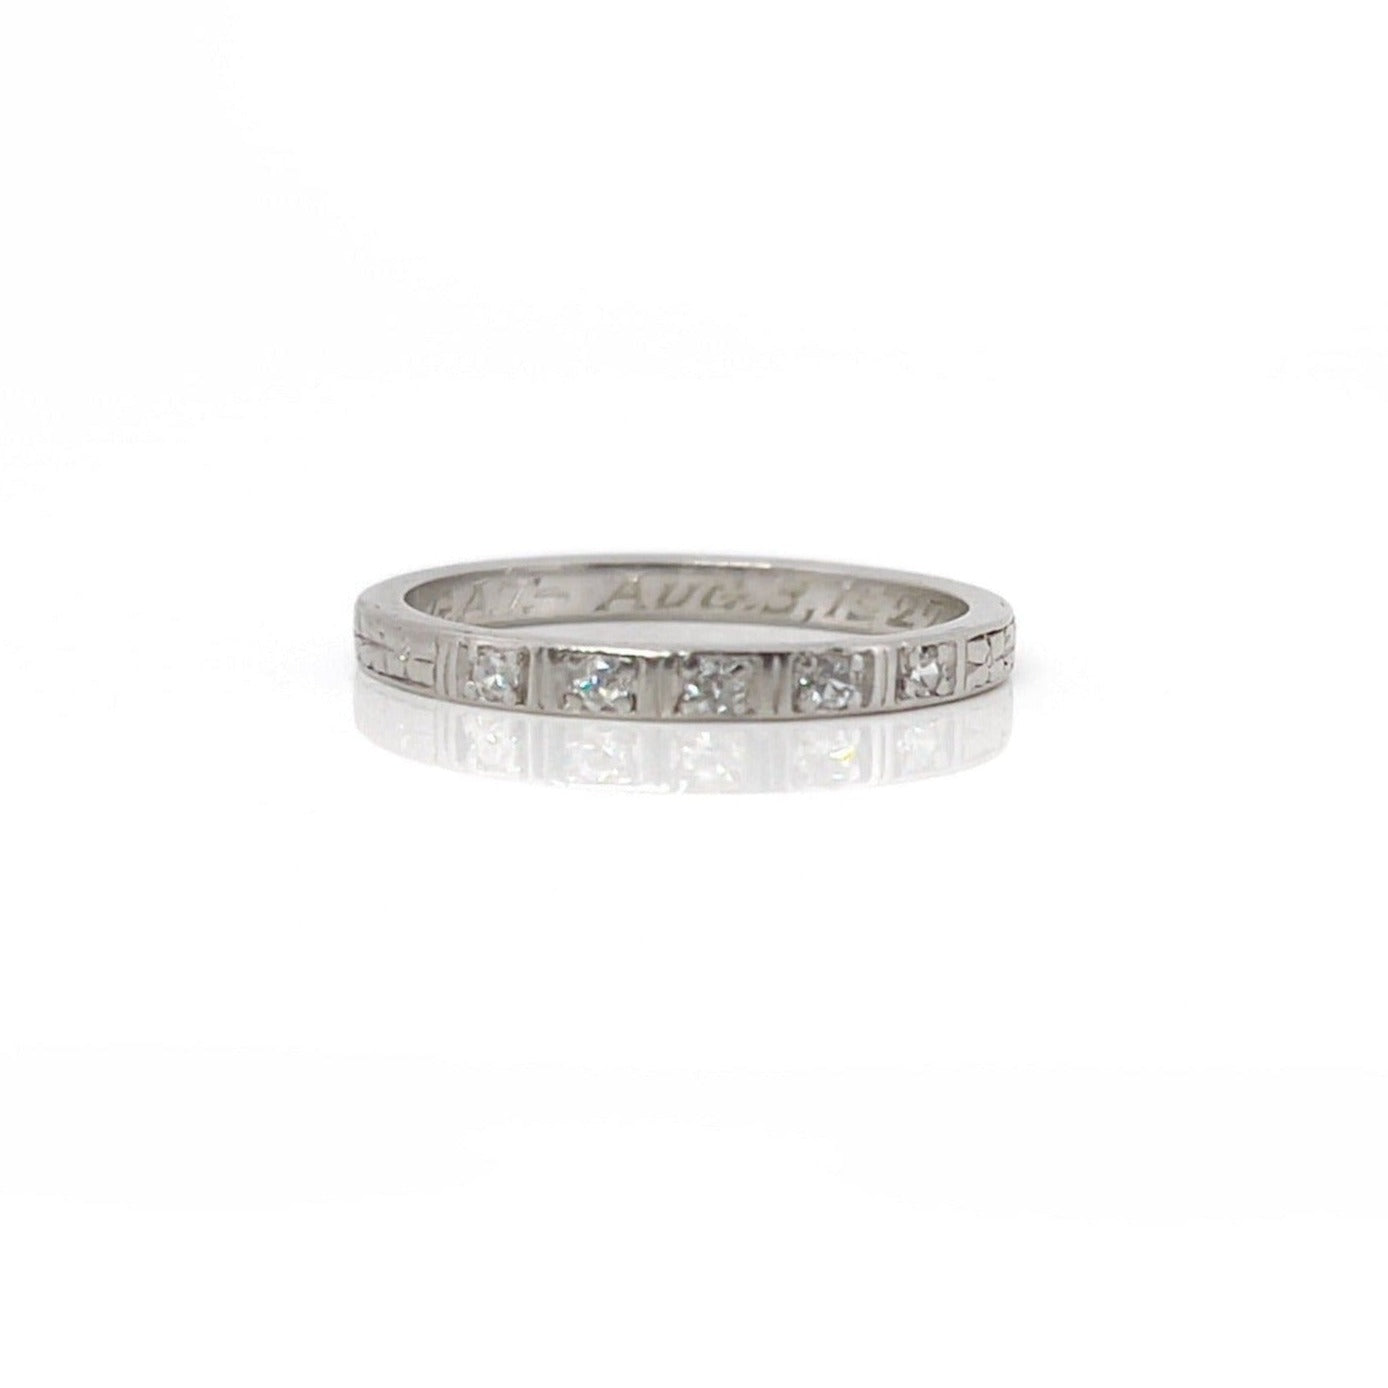 Art Deco Single Cut Diamond Ring, G.W.T. to G.A.T. Aug. 3, 1927, Platinum